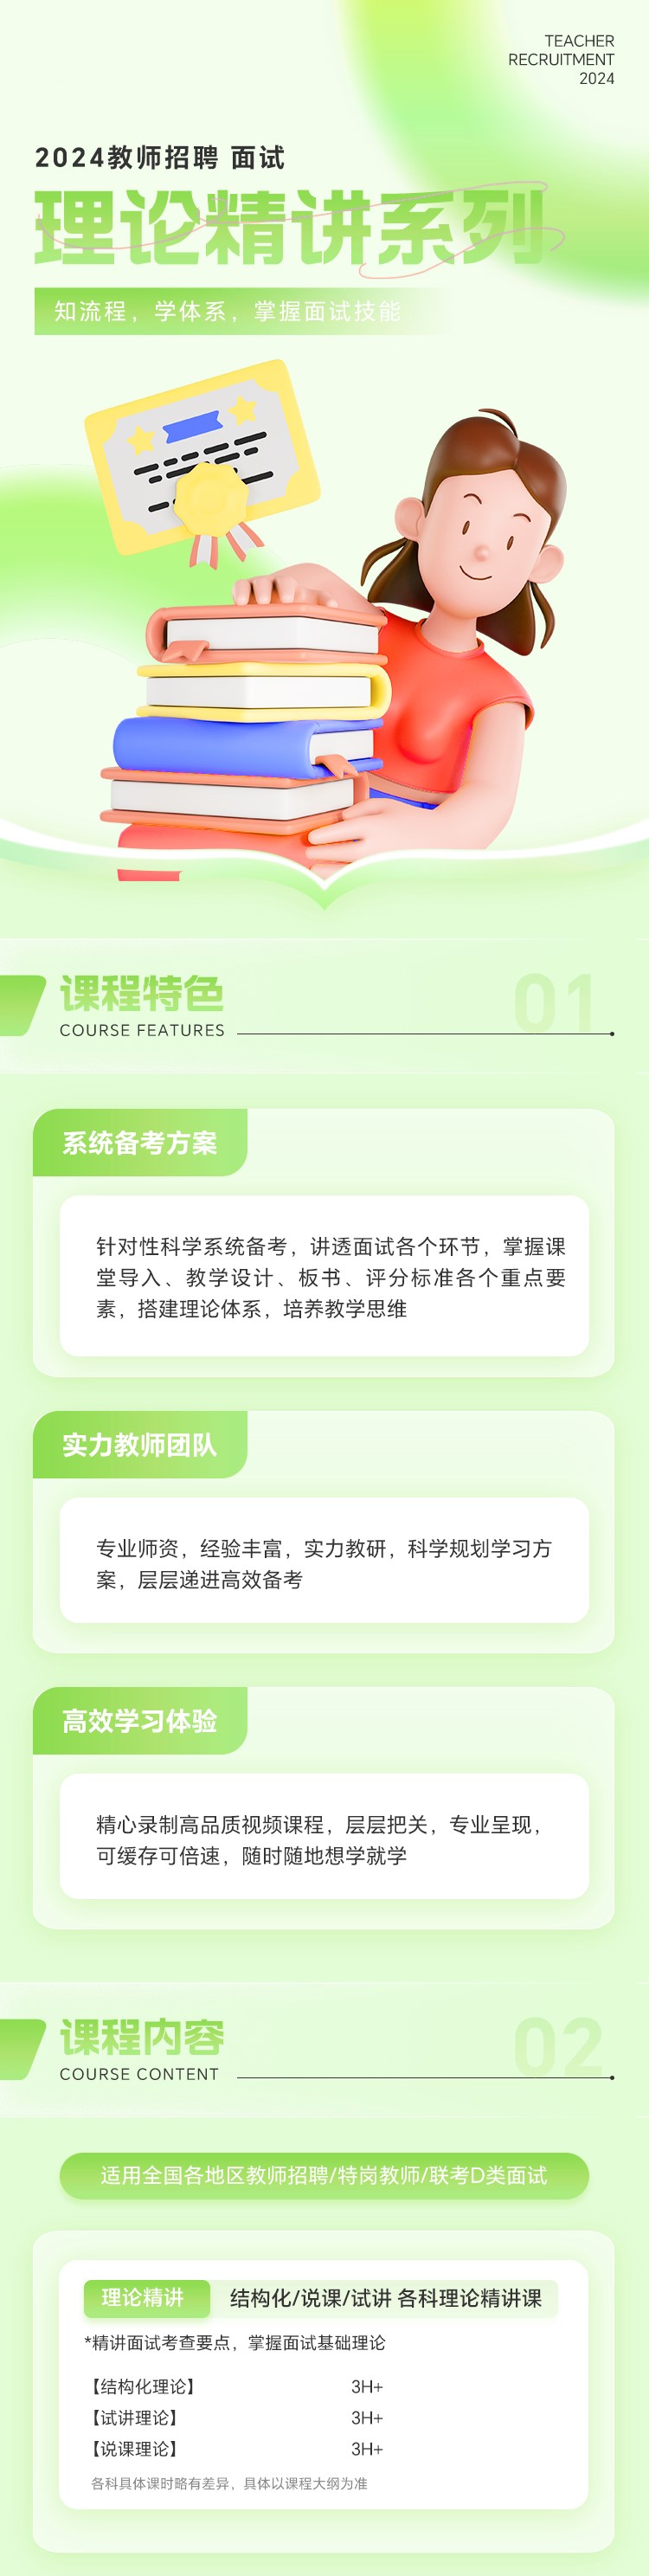 https://simg01.gaodunwangxiao.com/uploadfiles/product-center/202404/23/7b81f_20240423111612.jpg